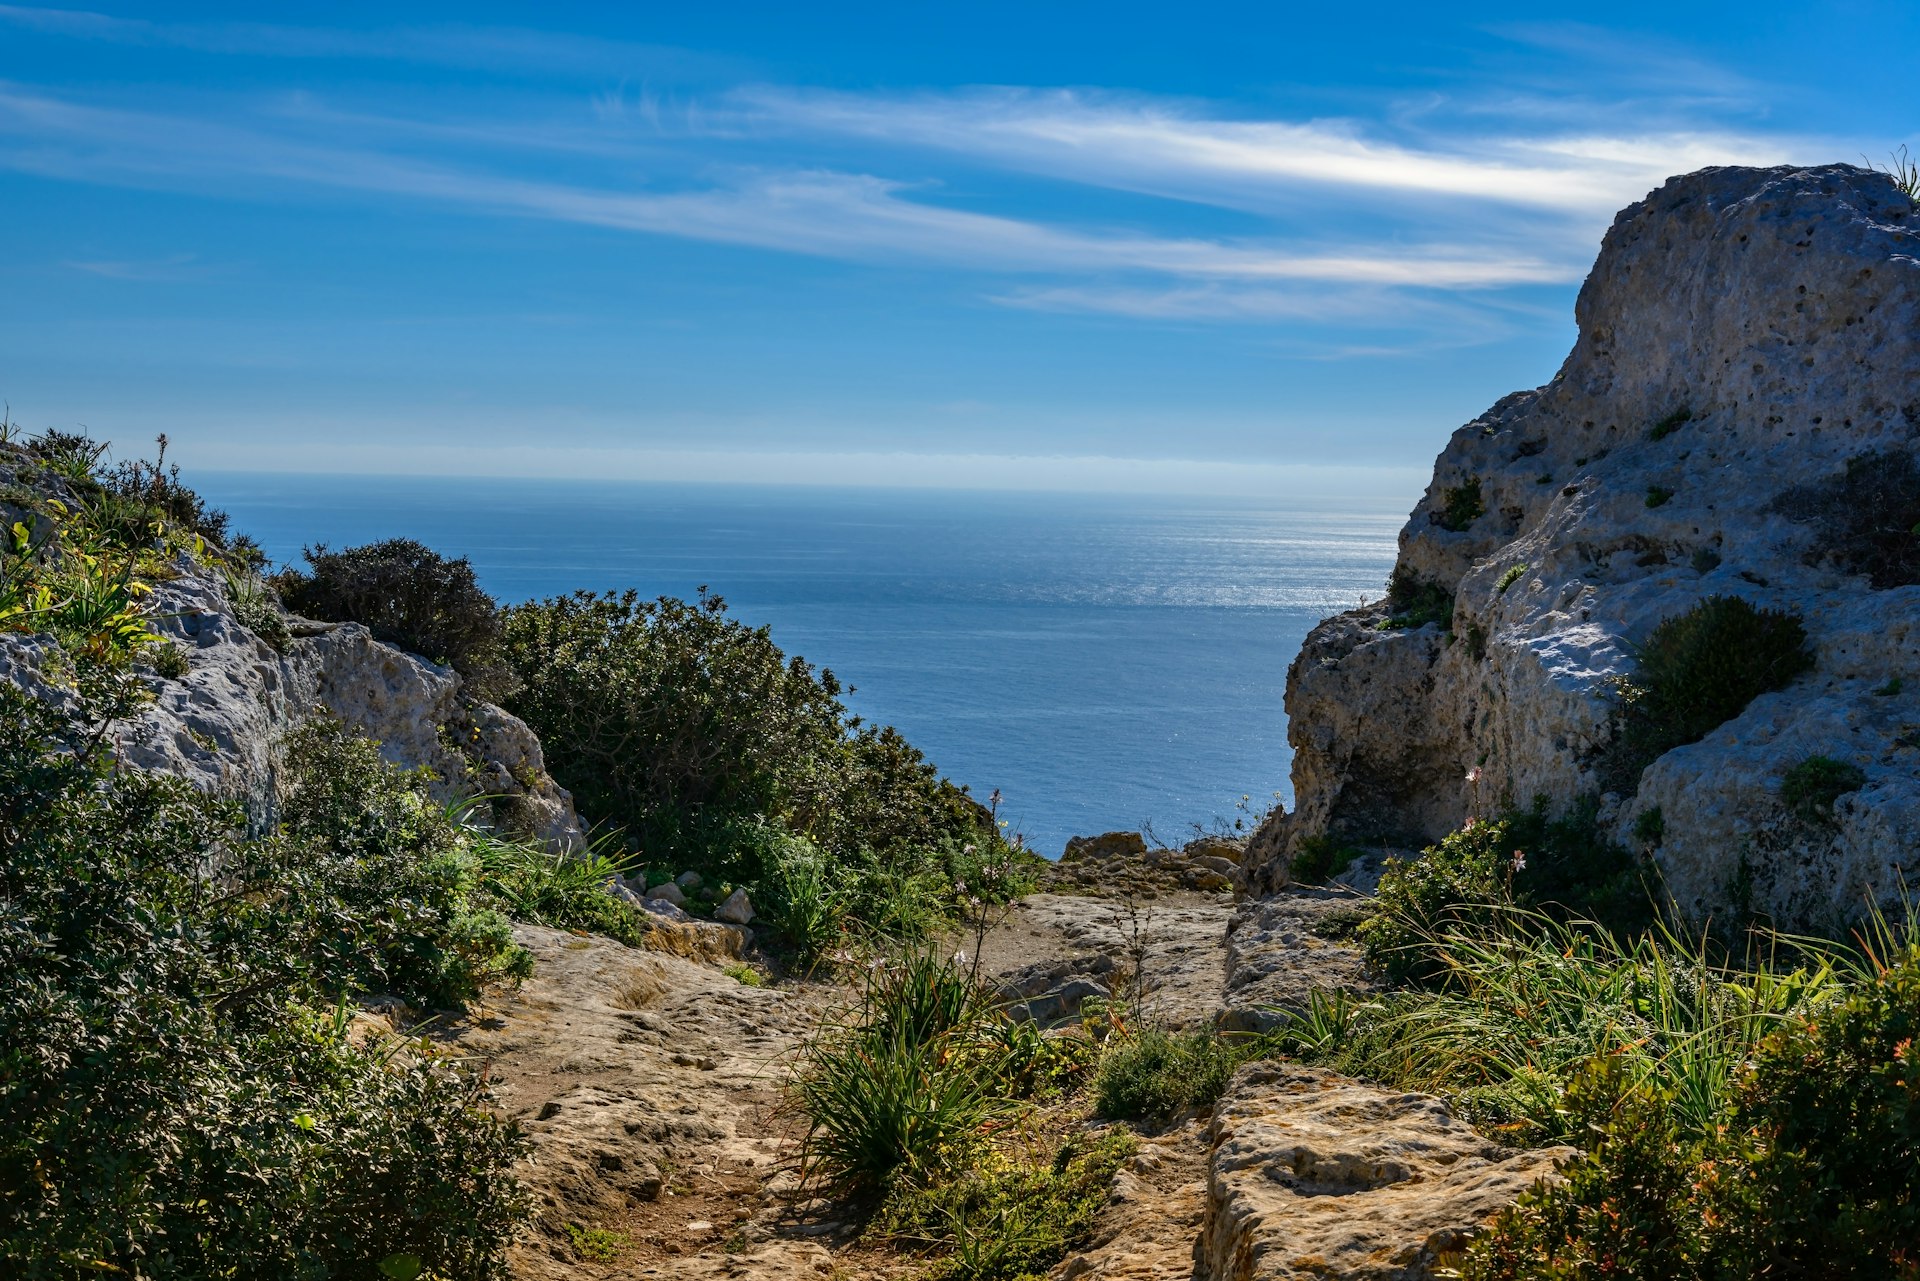 A path through the rocky landscape at Malta's Dingli Cliffs